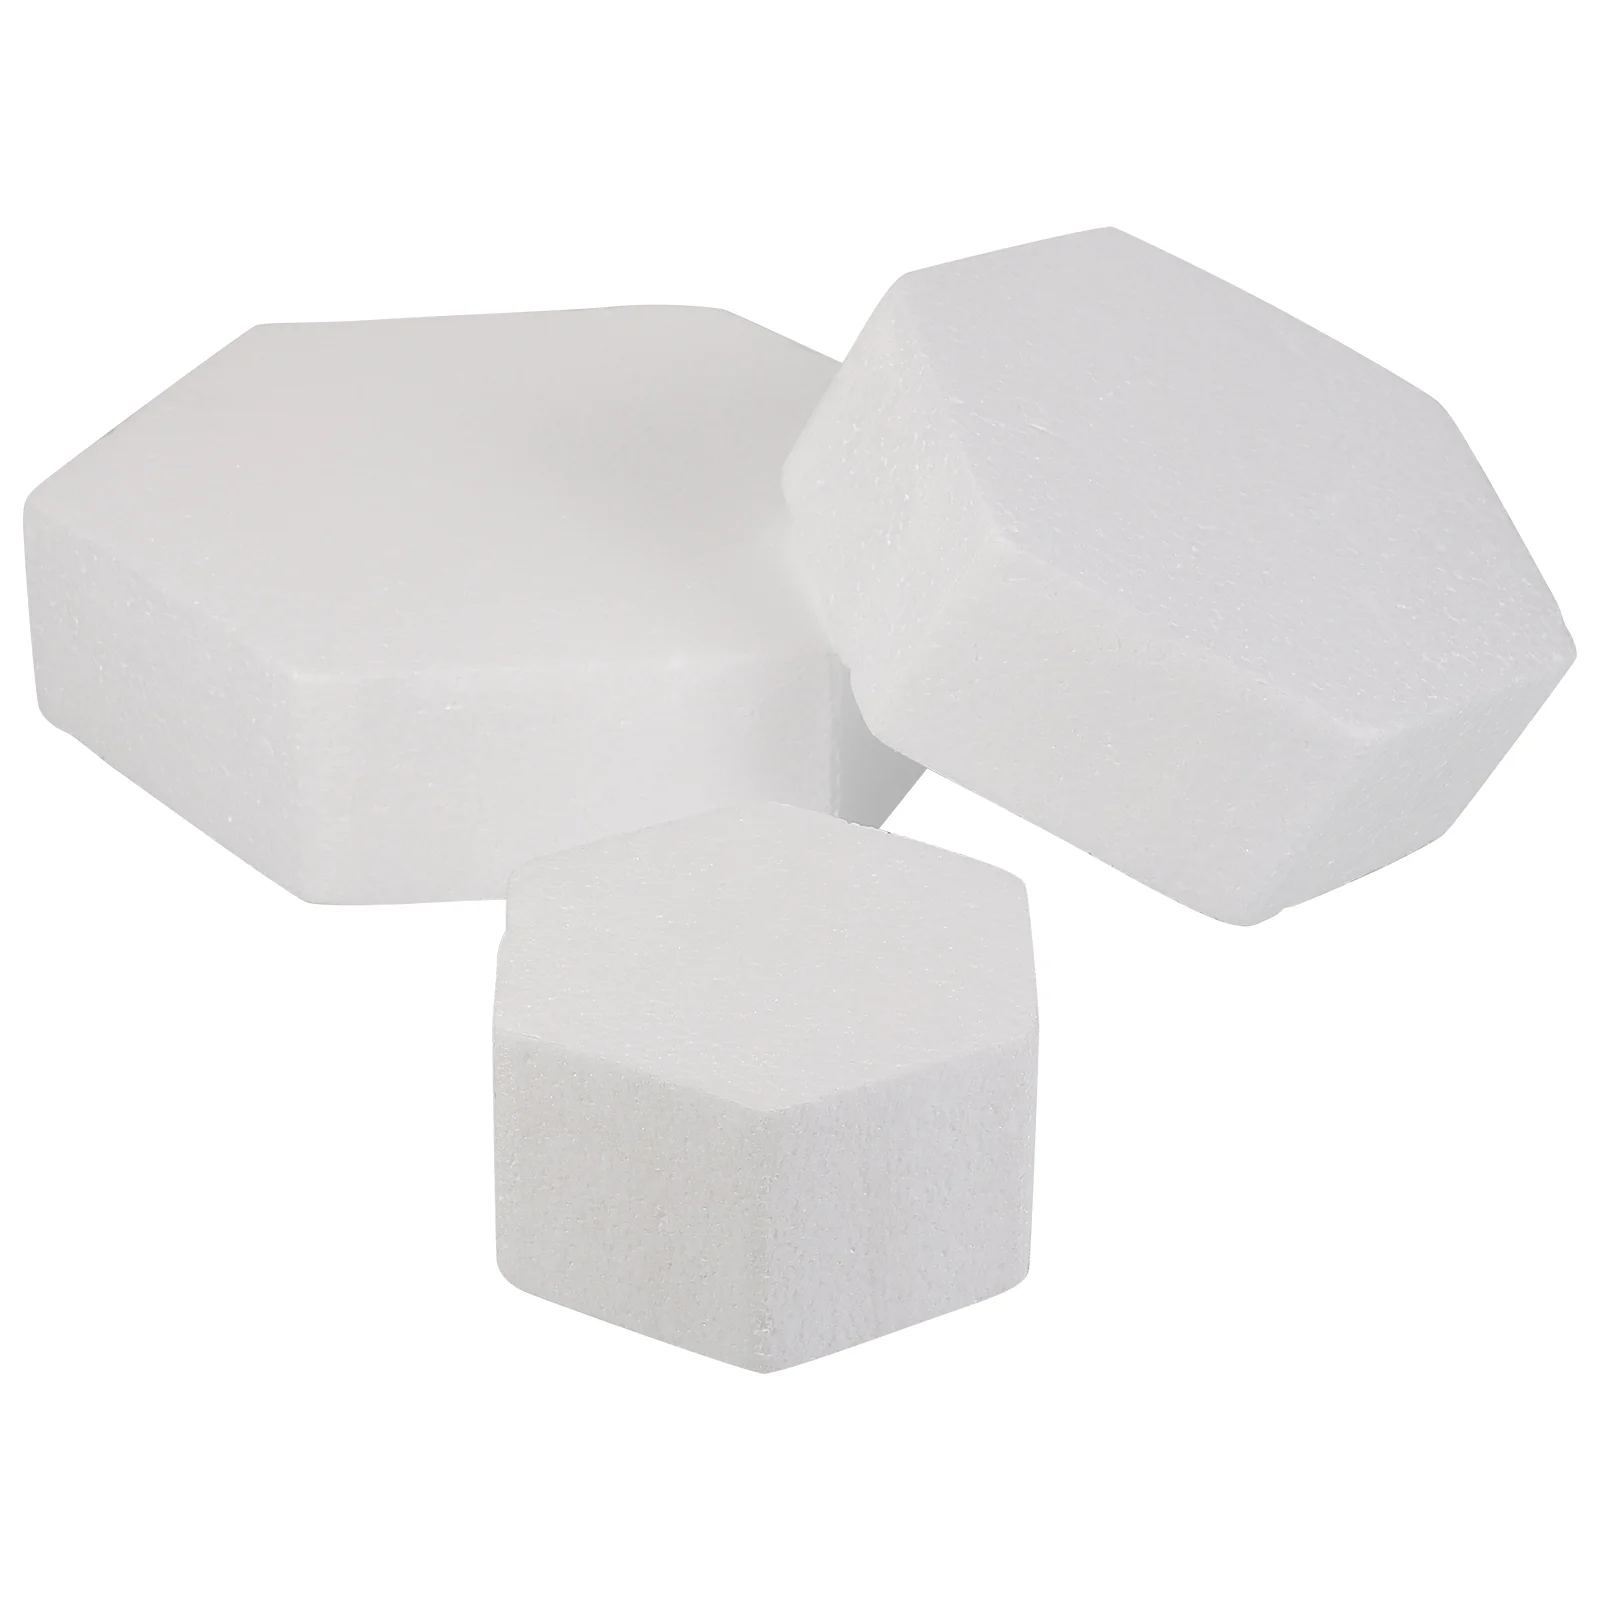 

Cakedummy Styrofoam Dummies Fake Craft Model Display Wedding Round Practice Forms Polystyrene Diyrounds Cakes Whitecircles Tiers